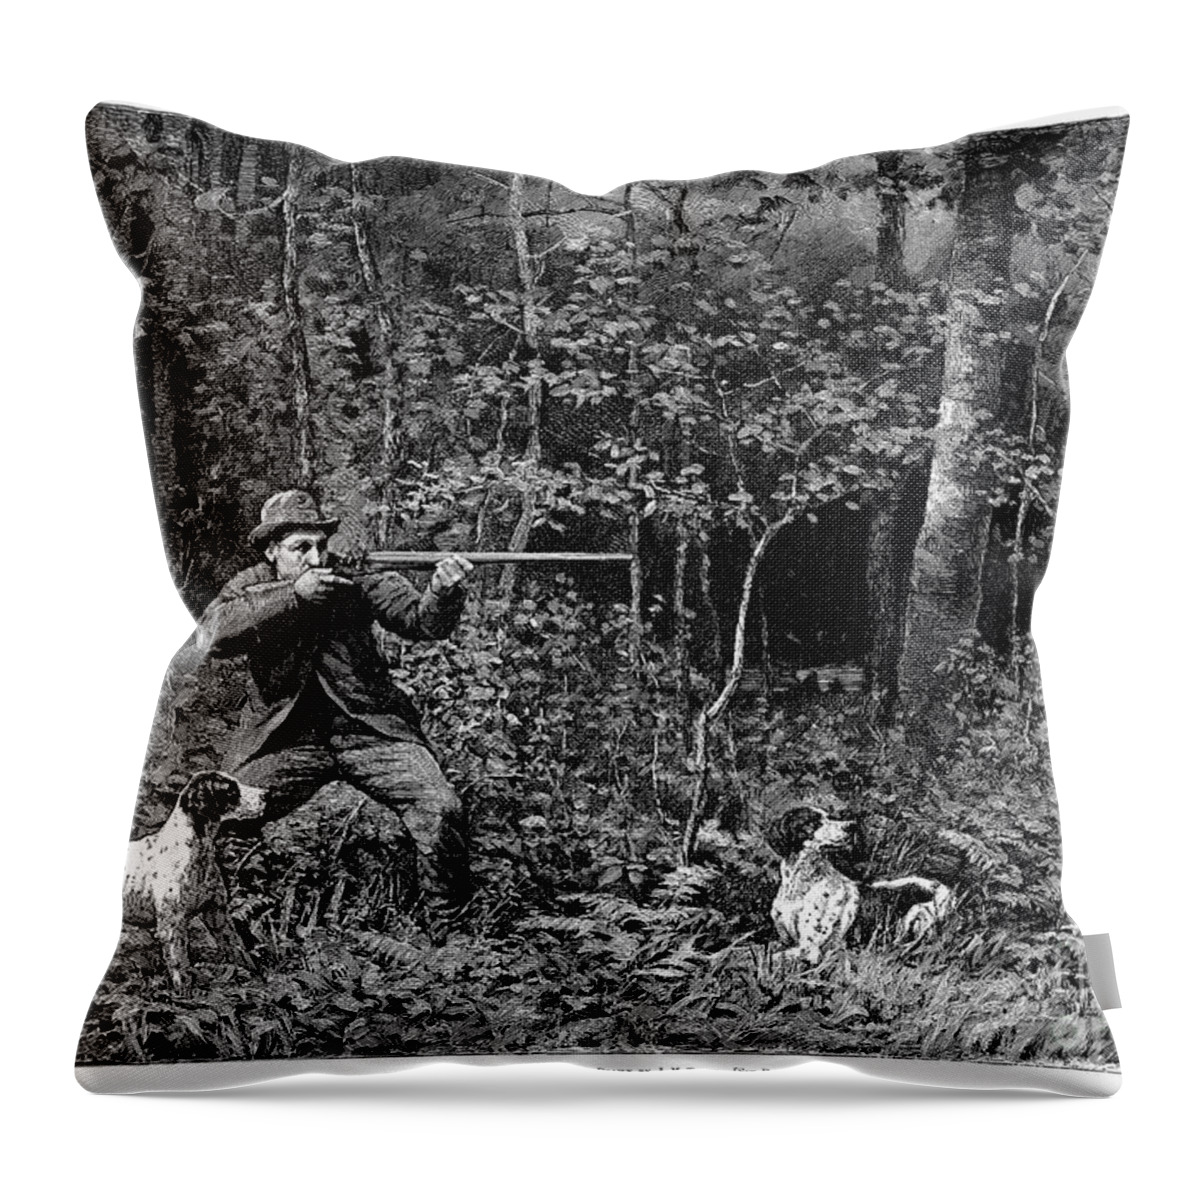 1886 Throw Pillow featuring the photograph Bird Shooting, 1886 by Granger